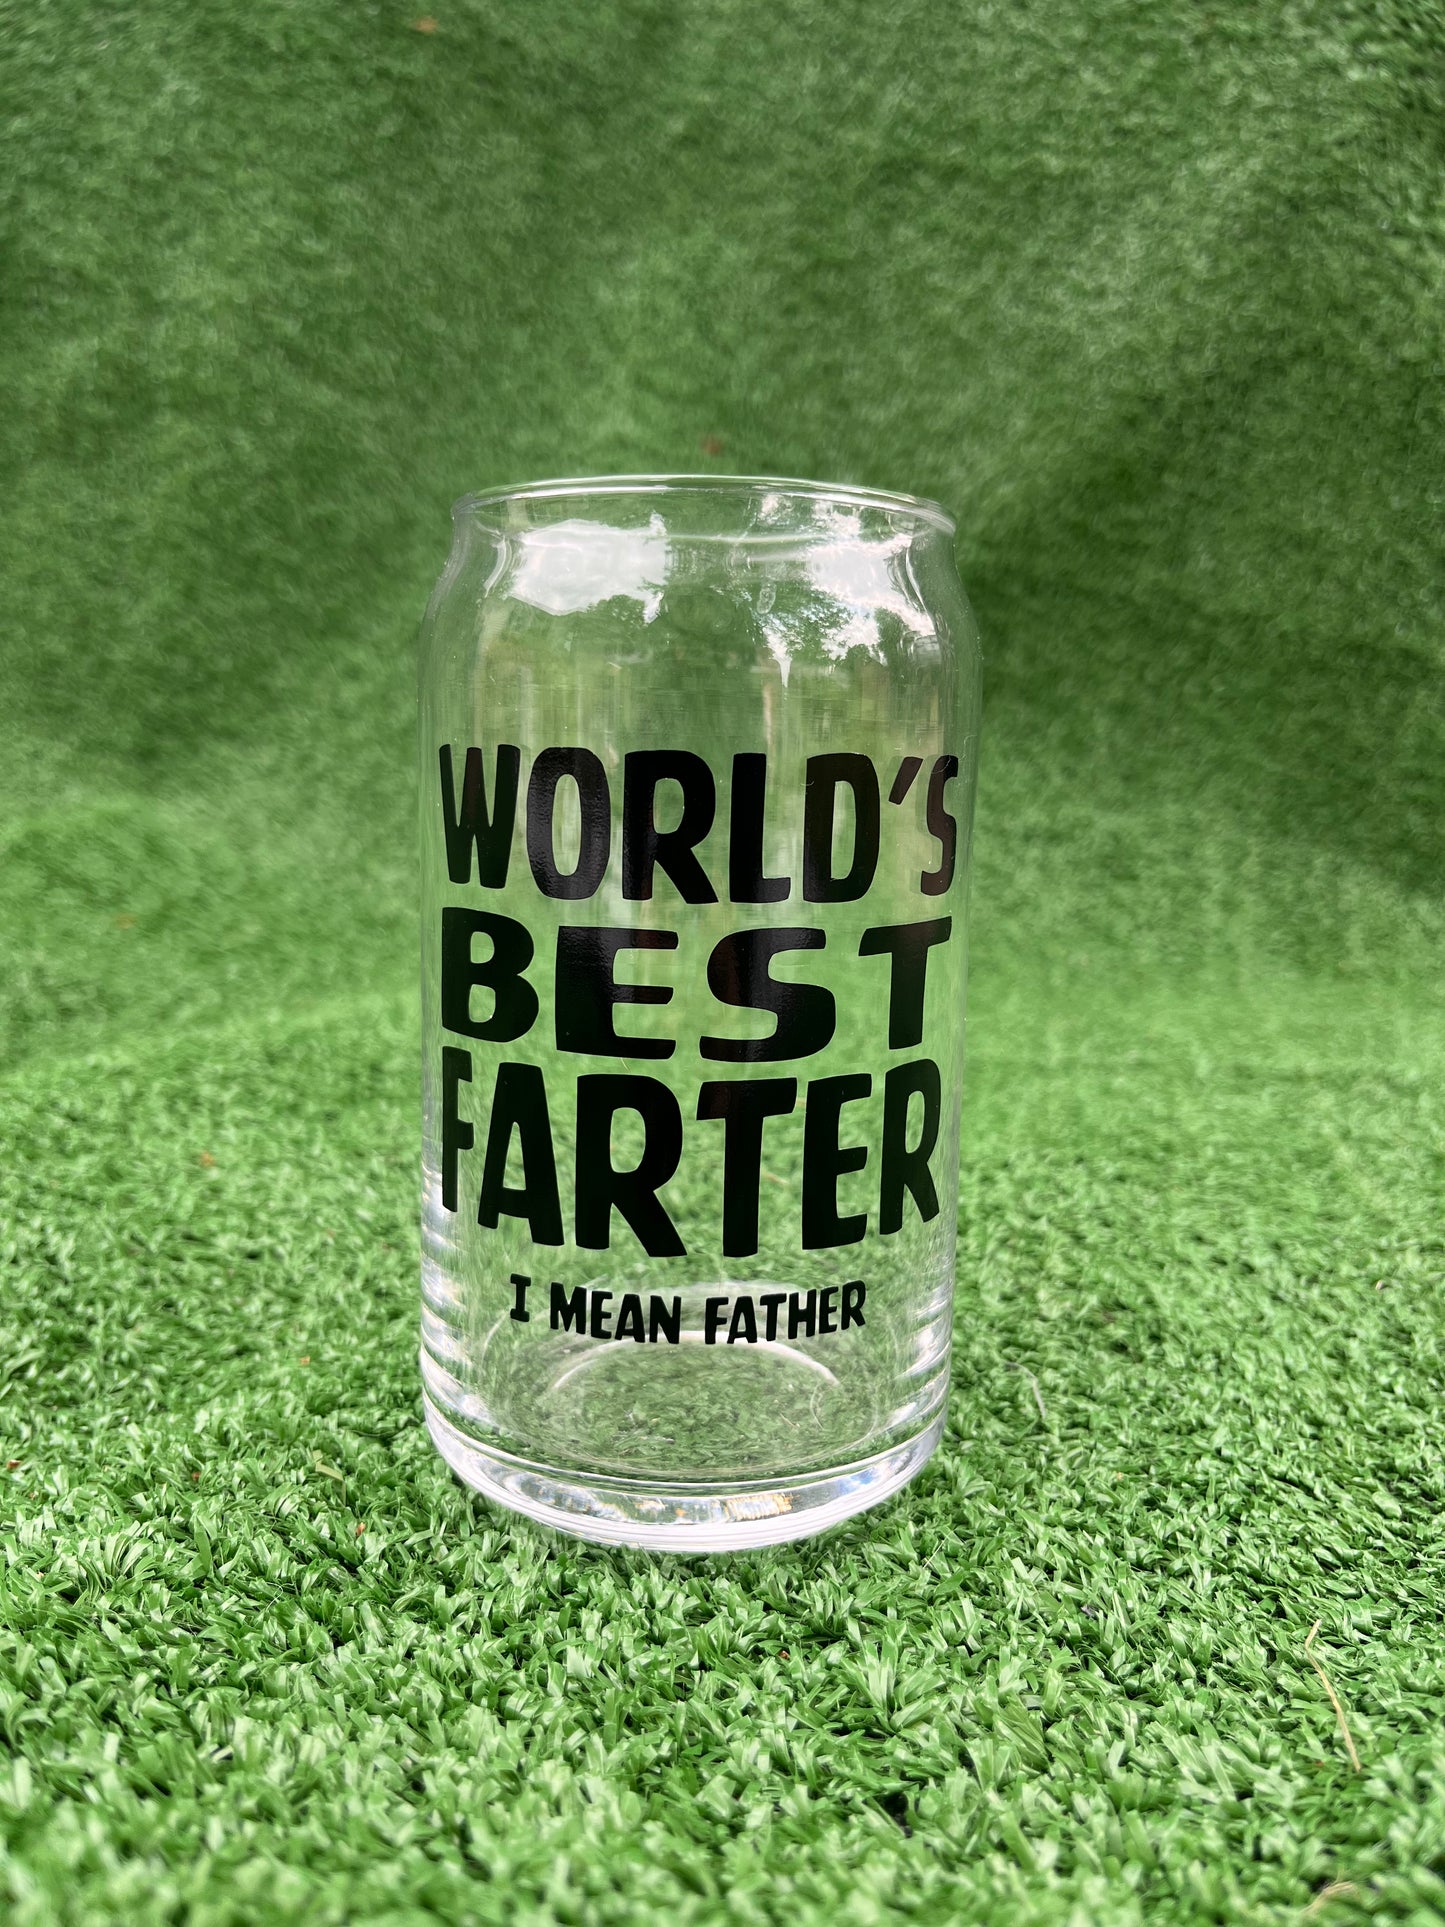 16oz “Worlds Best Farter Glass Cup